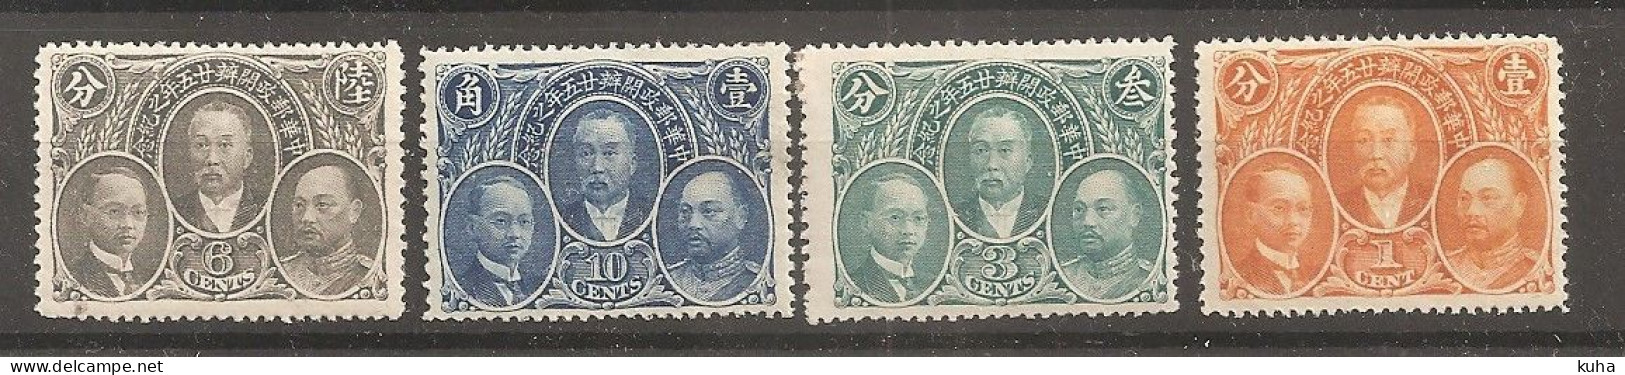 China Chine   1921 MH - 1912-1949 Republic